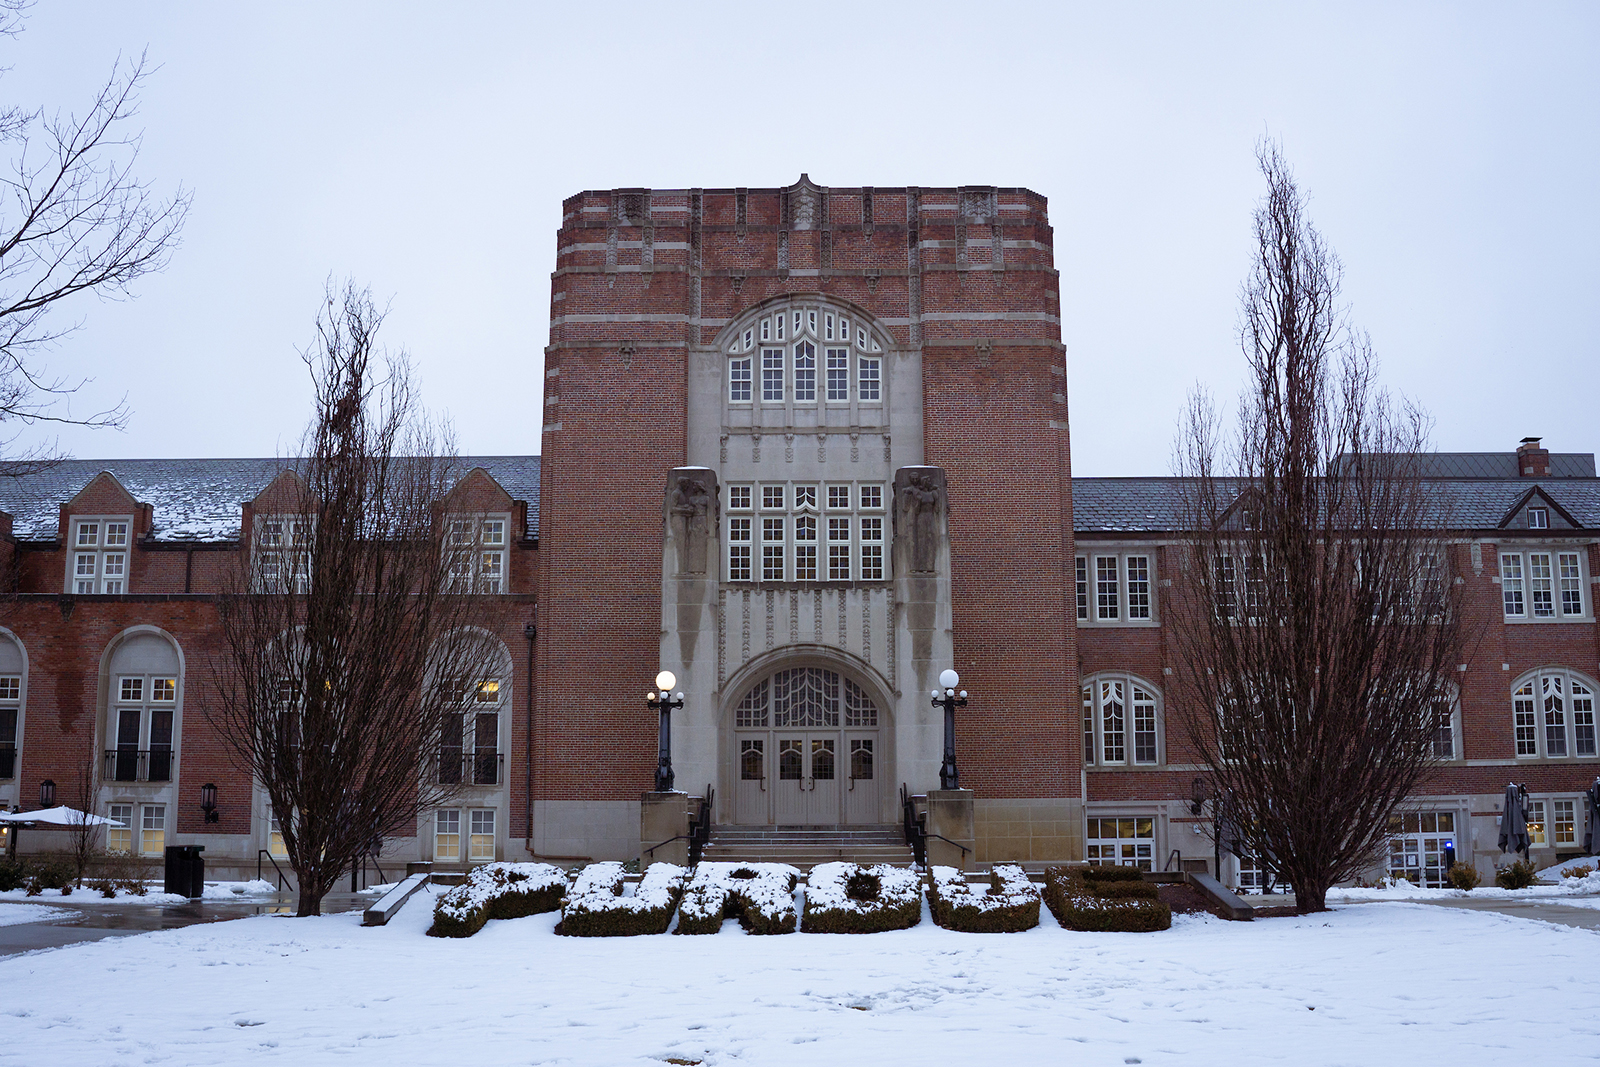 Exterior Purdue Memorial Union with snow